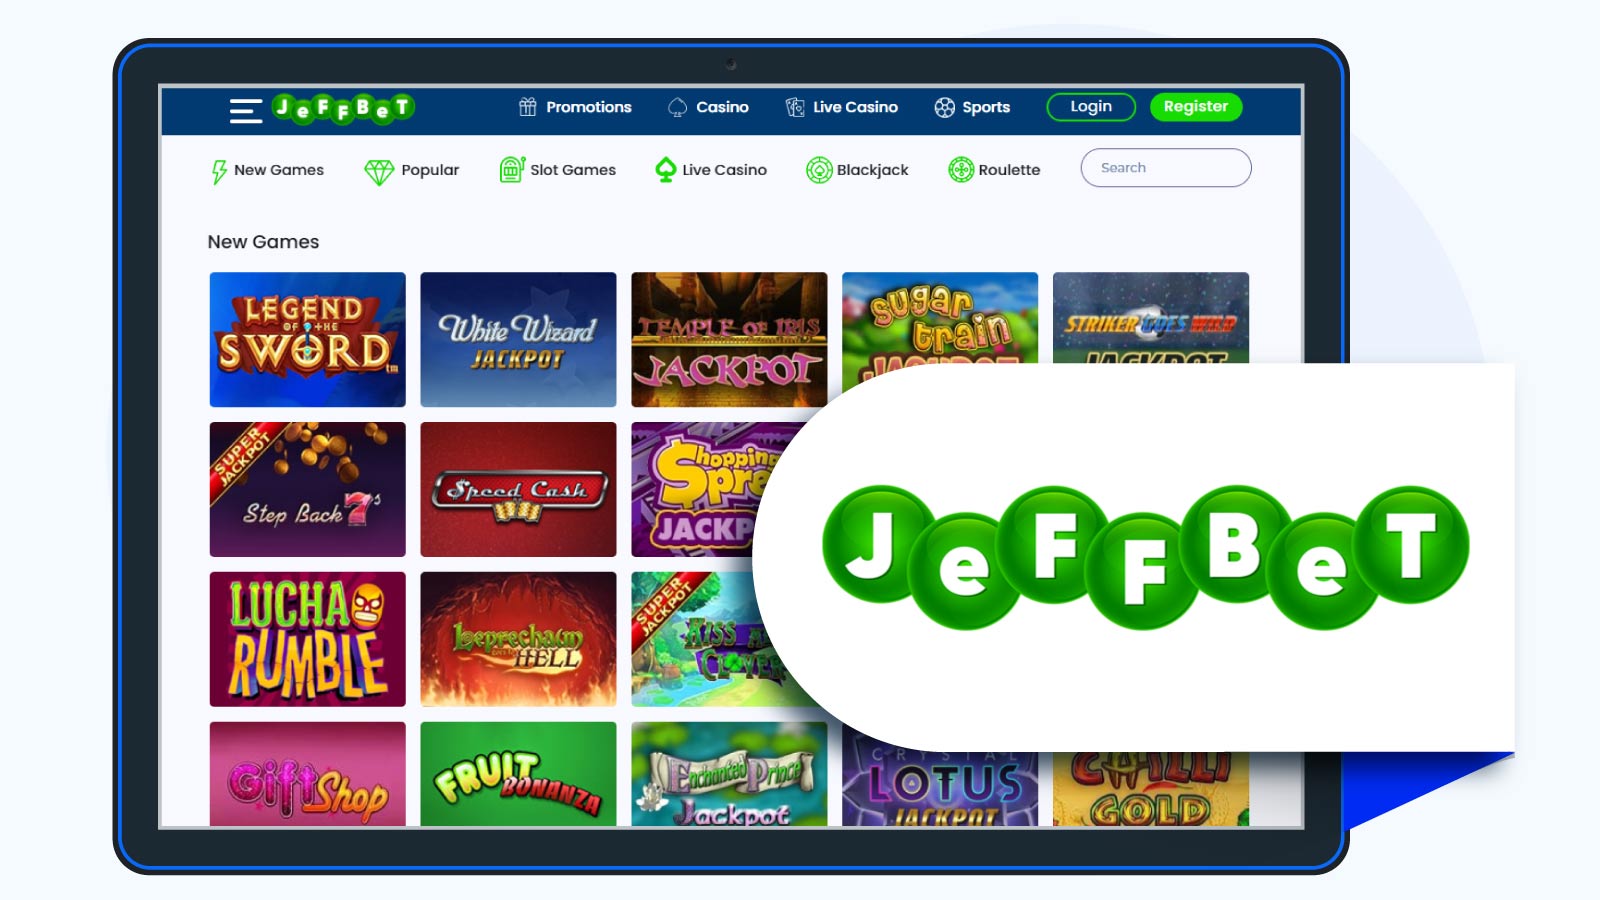 JeffBet Casino – CasinoAlpha’s Editor’s Choice for Best New Casino UK